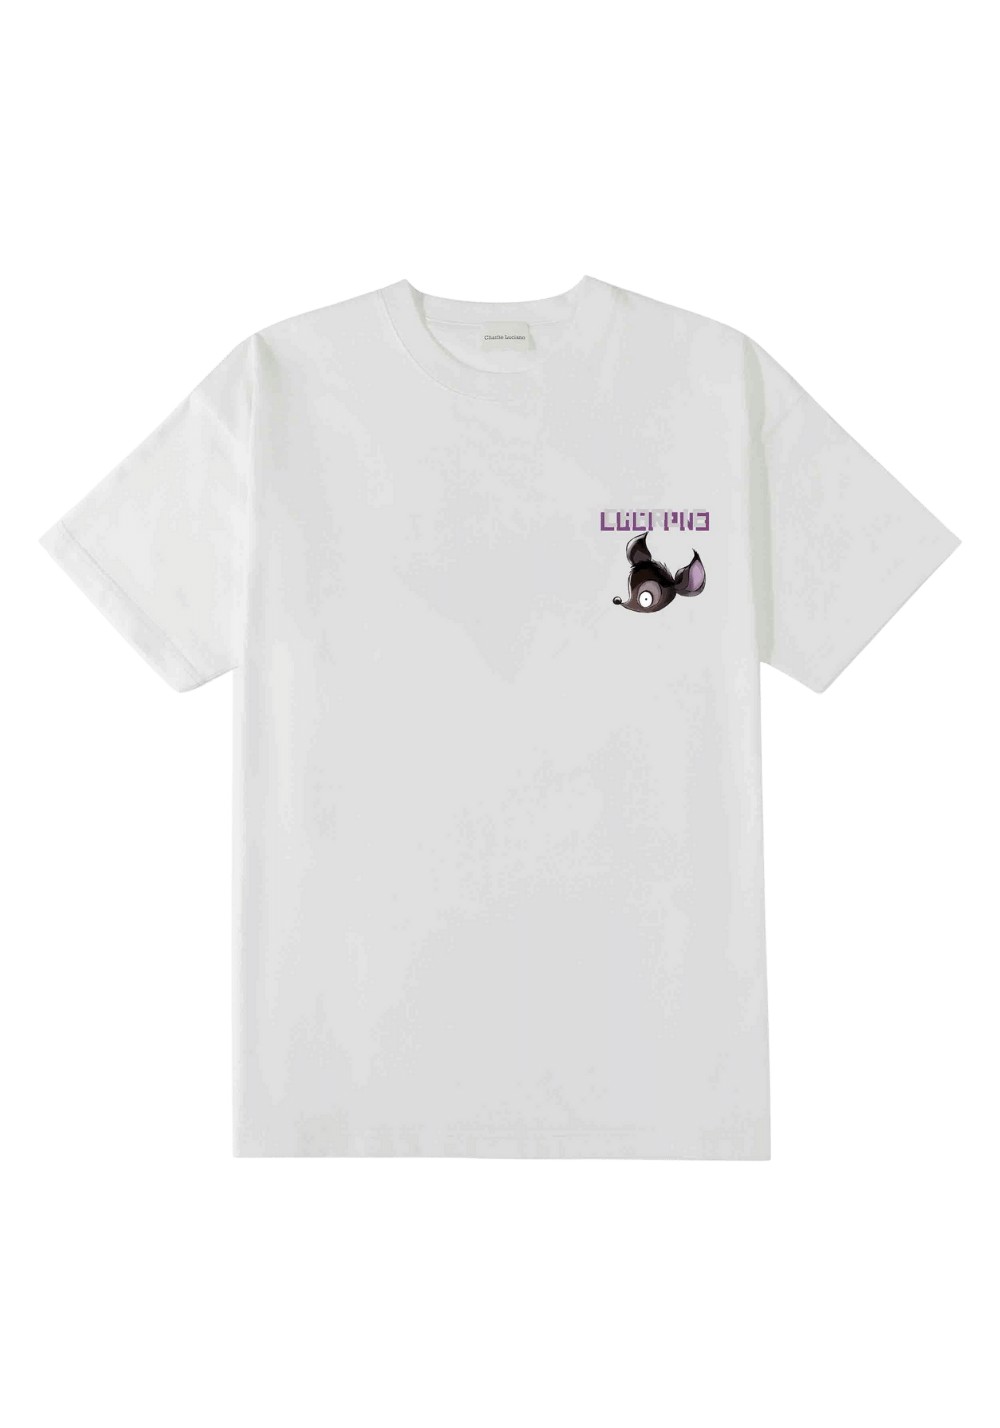 'Bambi' Backside Print T-Shirt - PSYLOS 1, 'Bambi' Backside Print T-Shirt, T-Shirt, Charlie Luciano, PSYLOS 1